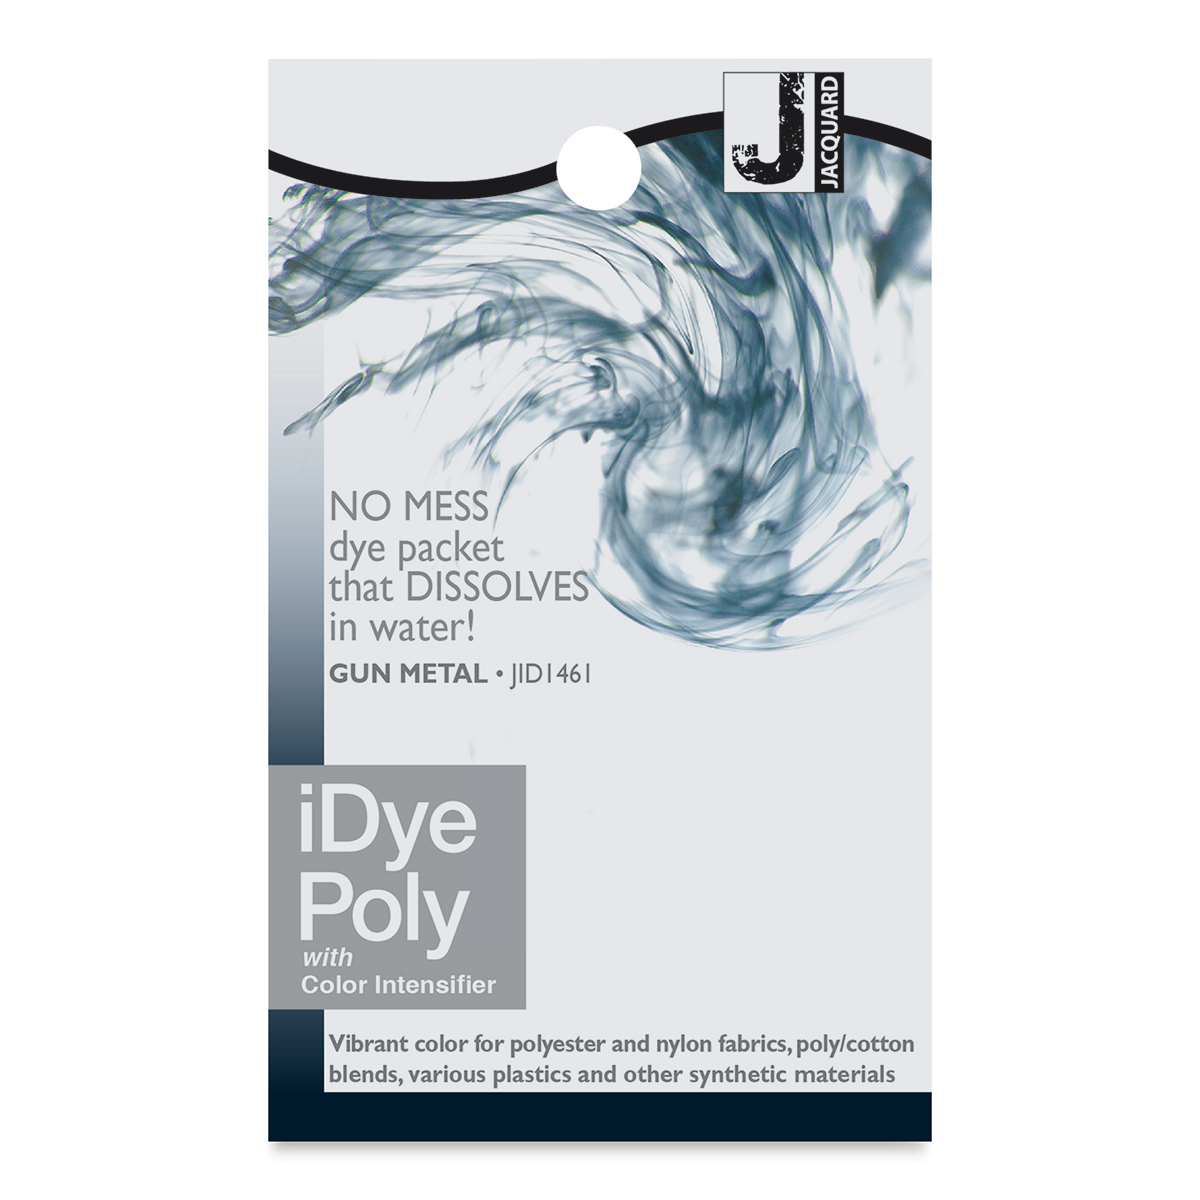 Jacquard iDye Poly Fabric Dye 14g-Orange, 1 count - Ralphs